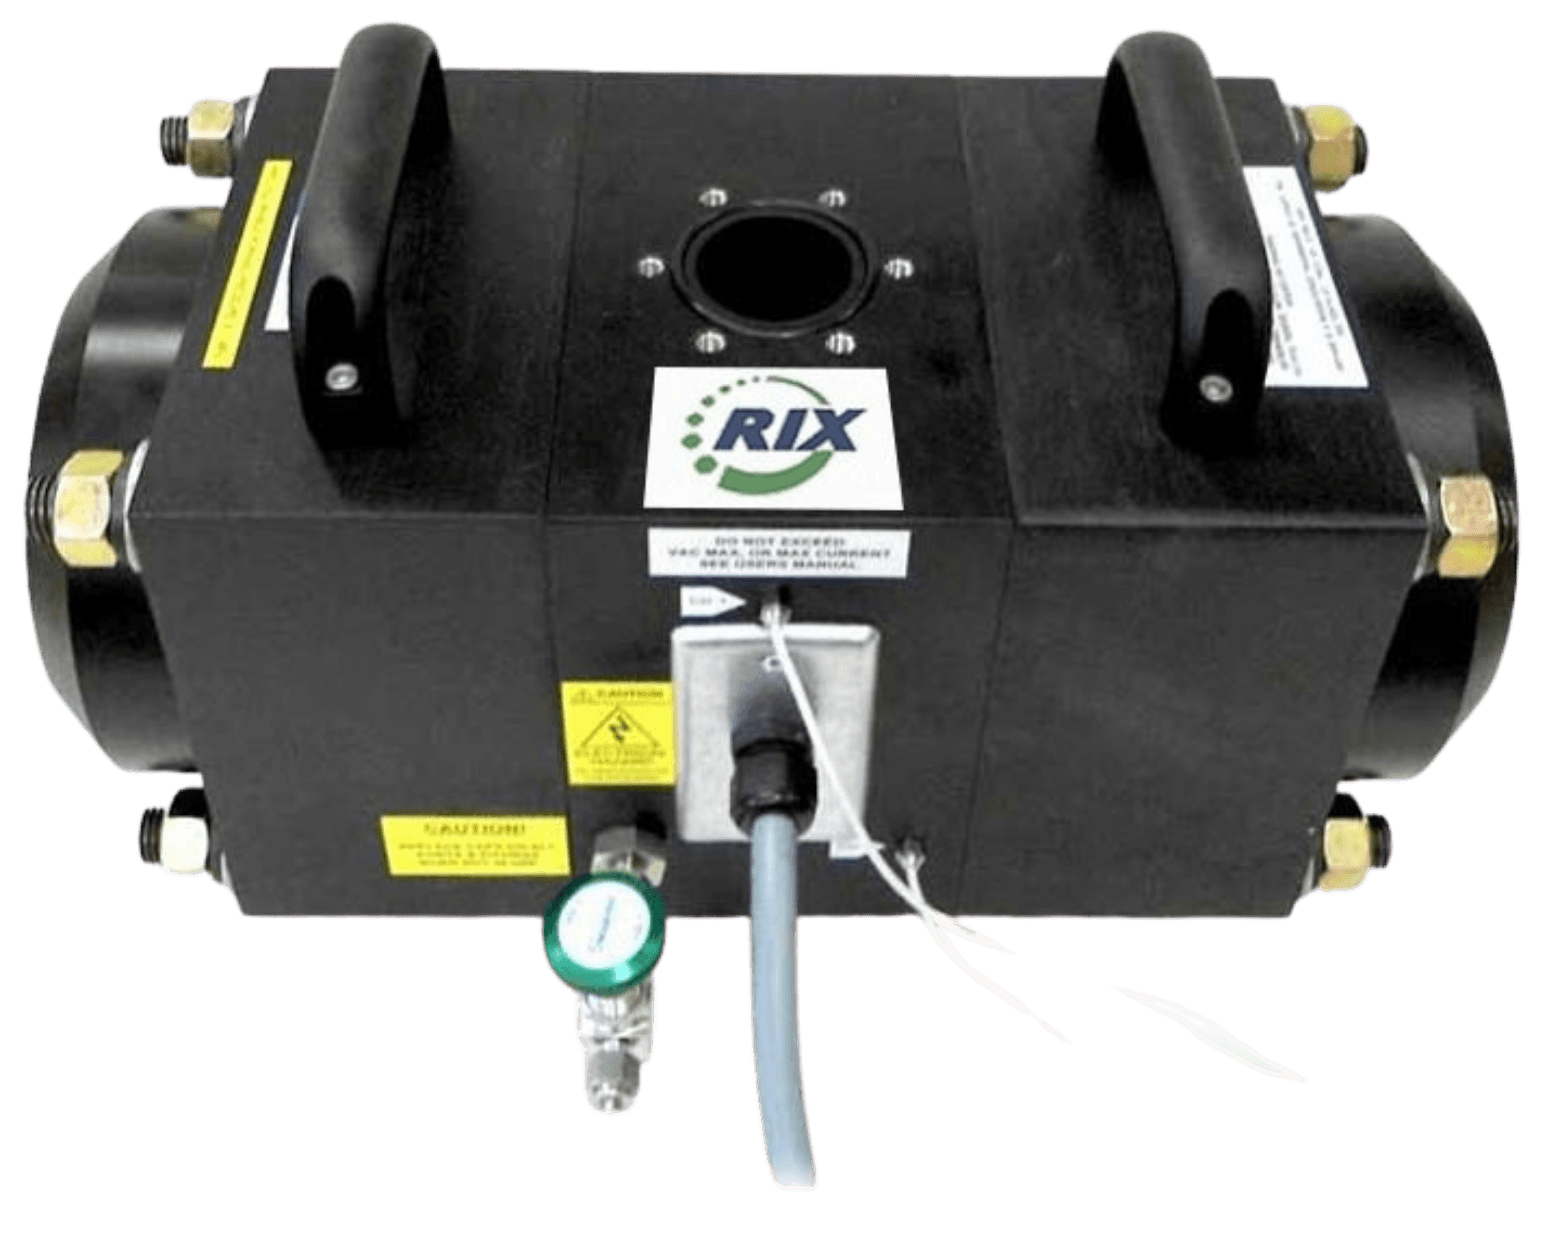 RIX Industries Cool - Pressure Wave Generators